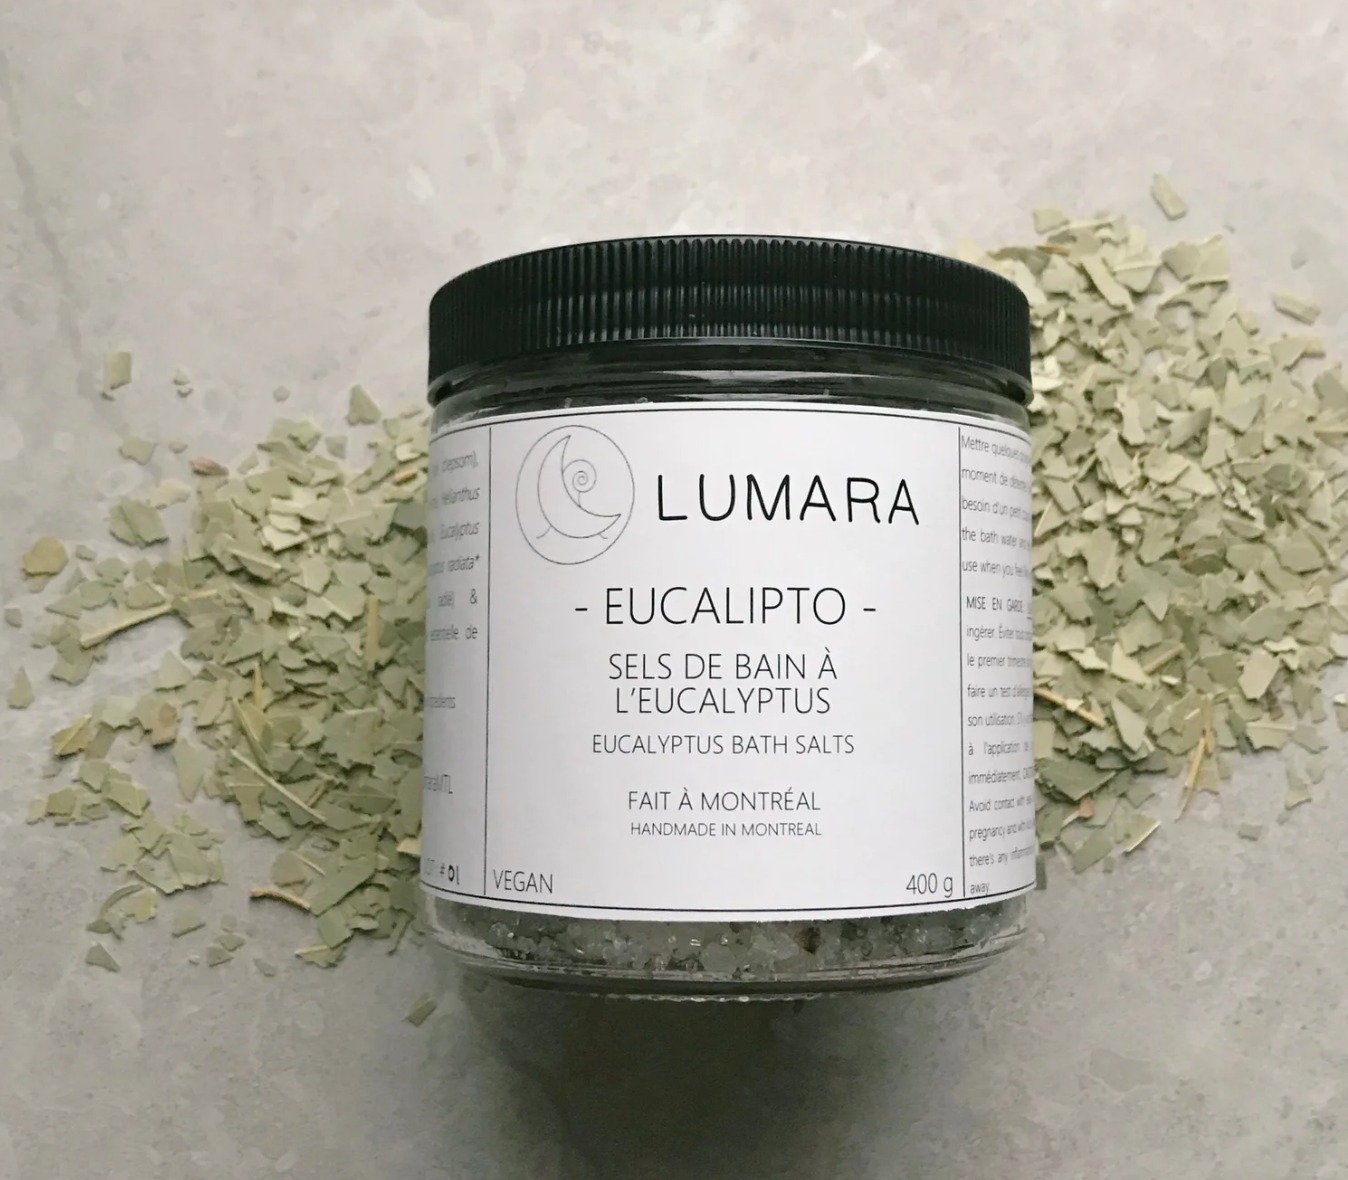 Eucalipto sels de bain - bath salts - Lumara